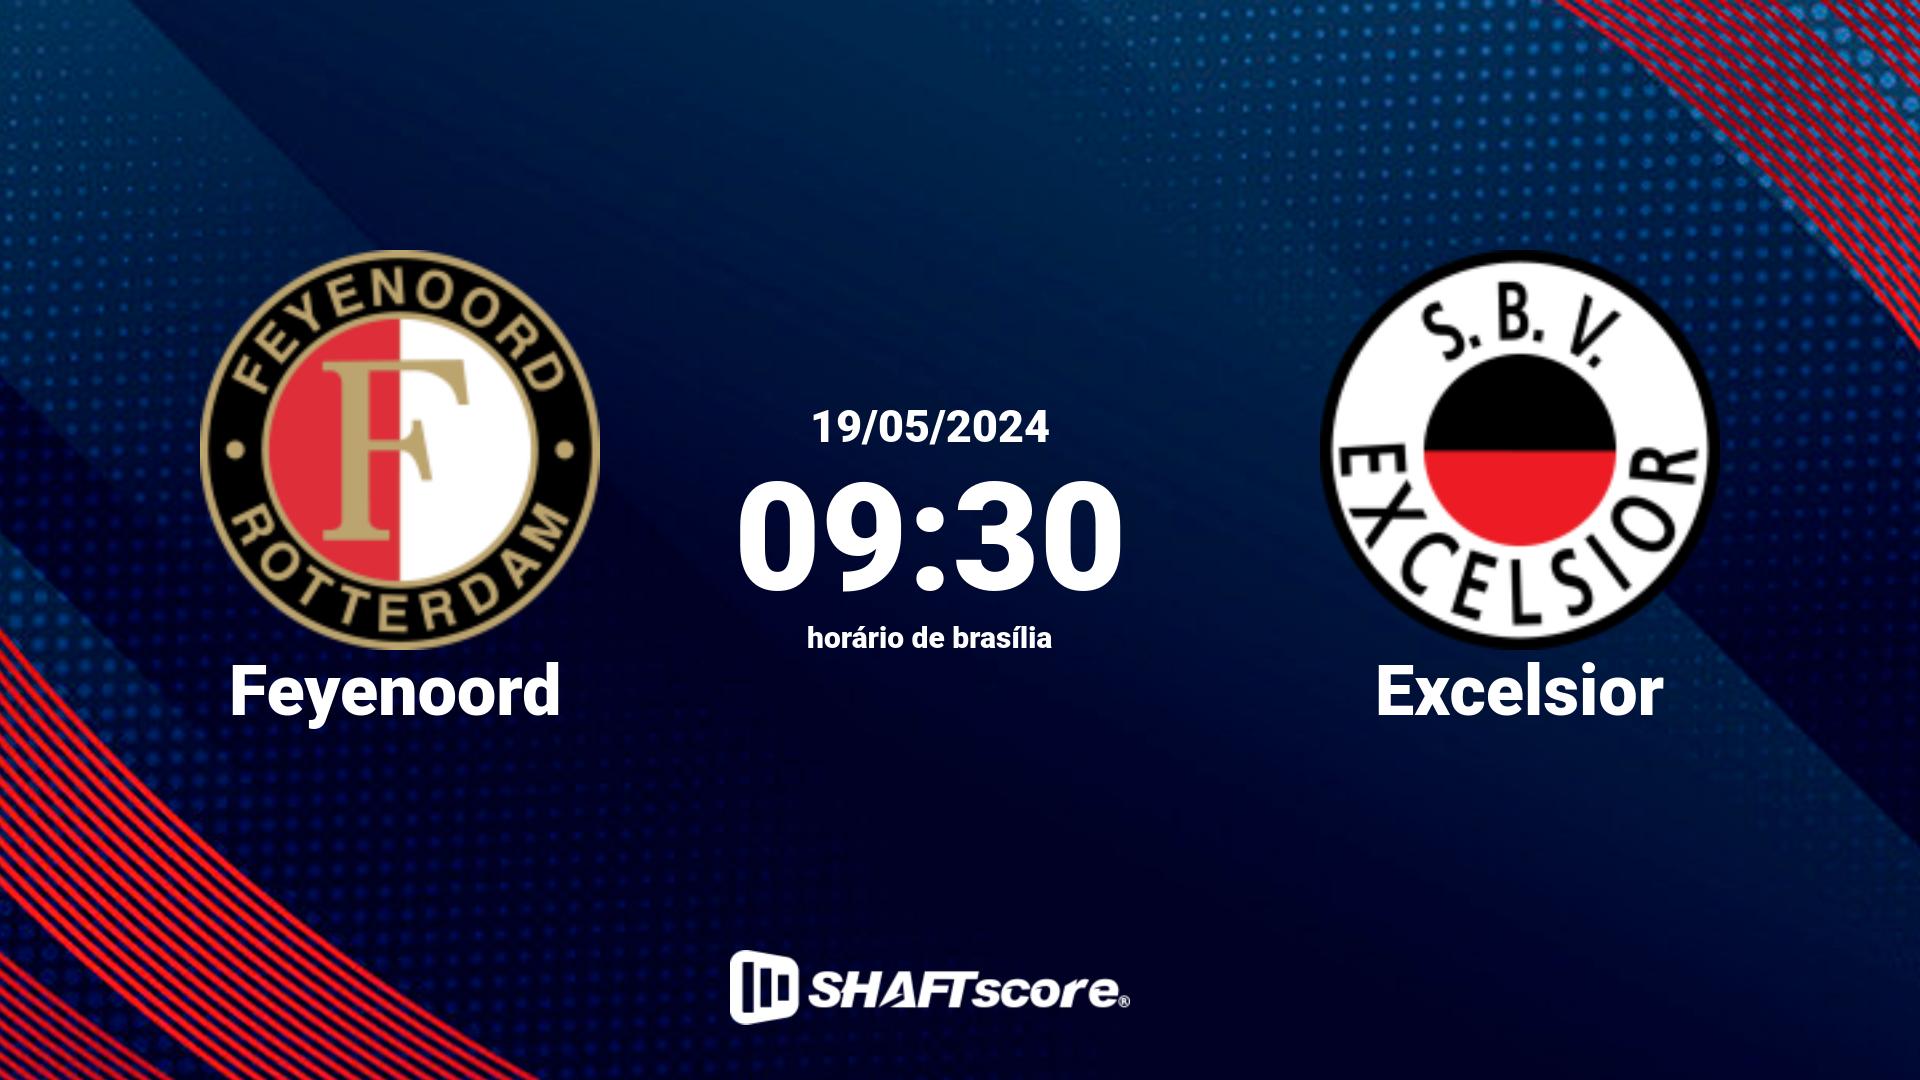 Estatísticas do jogo Feyenoord vs Excelsior 19.05 09:30